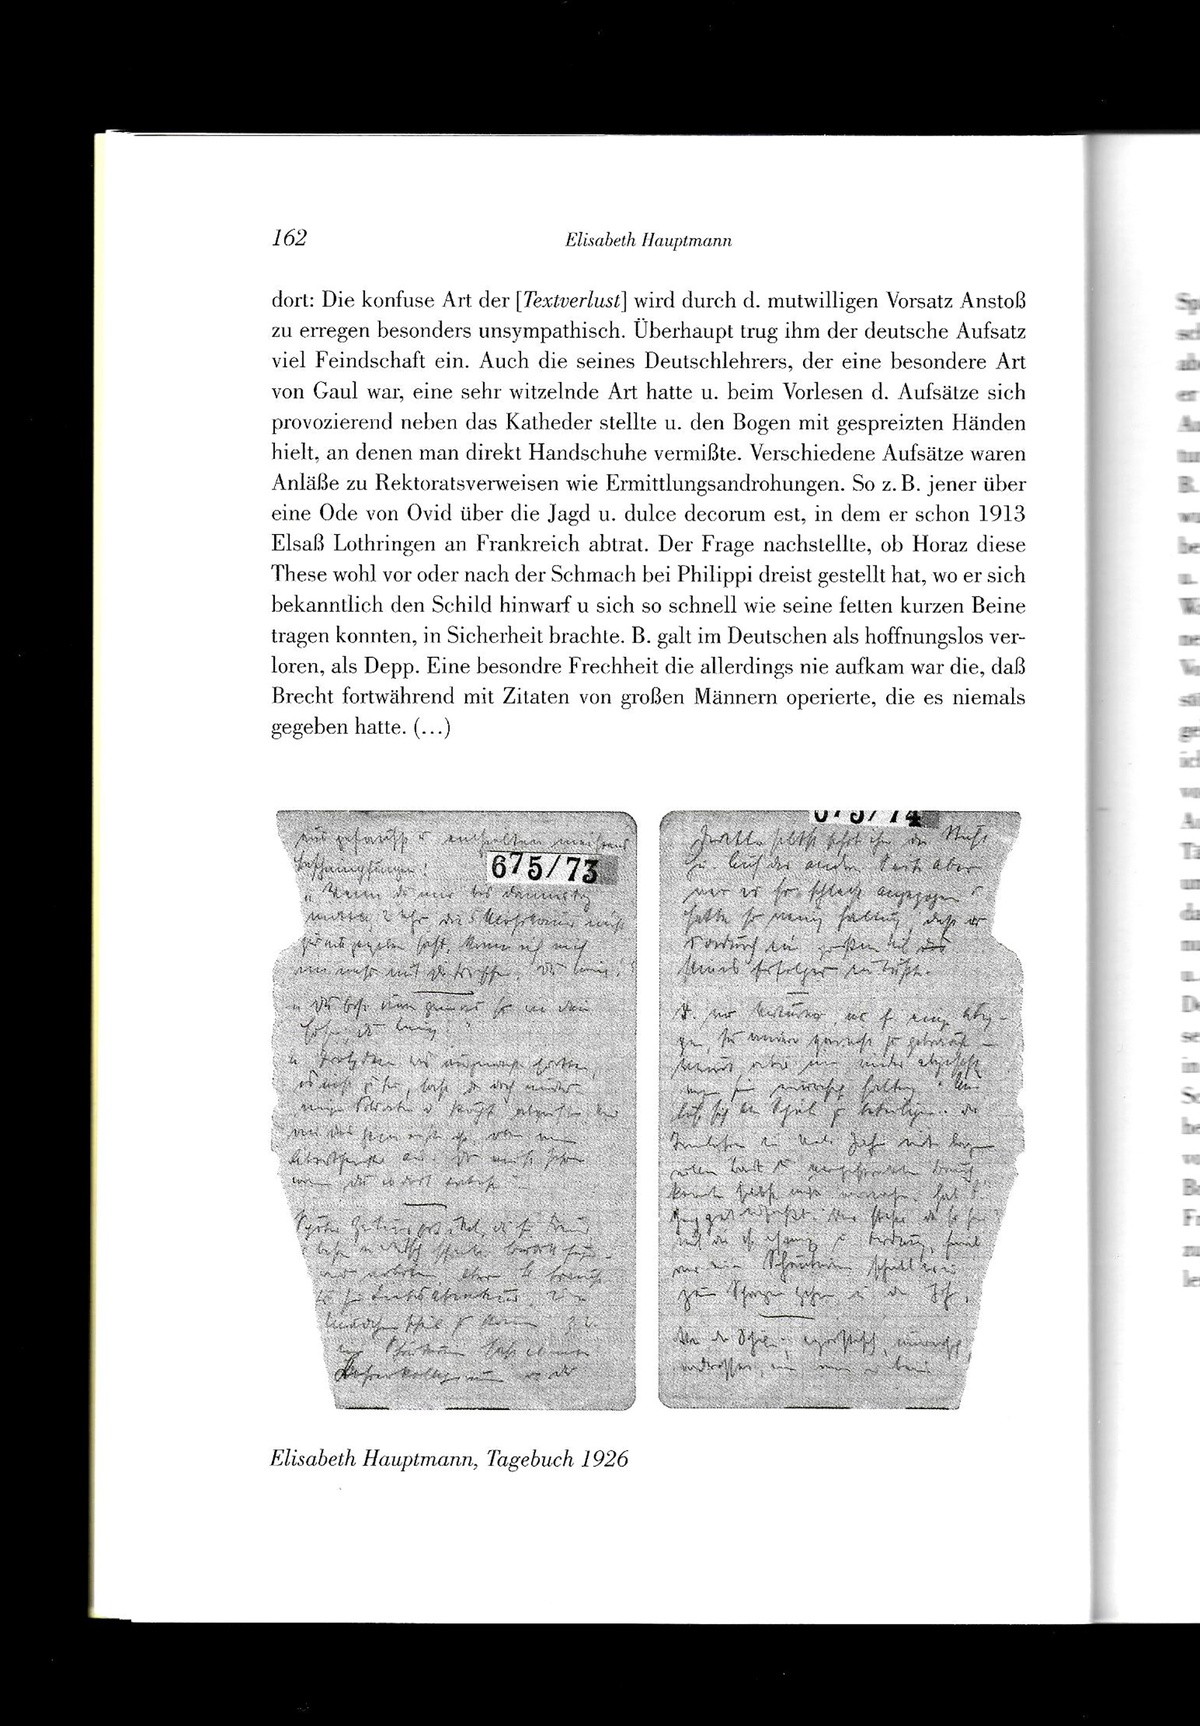 Elisabeth Hauptmann 2 × sehr über ihn geärgert. Diary notes on Brecht. With a prefatory note by Martin Kölbel and Peter Villwock.In Sinn und Form, Heft 2/2021, p. 155-163, here p. 162